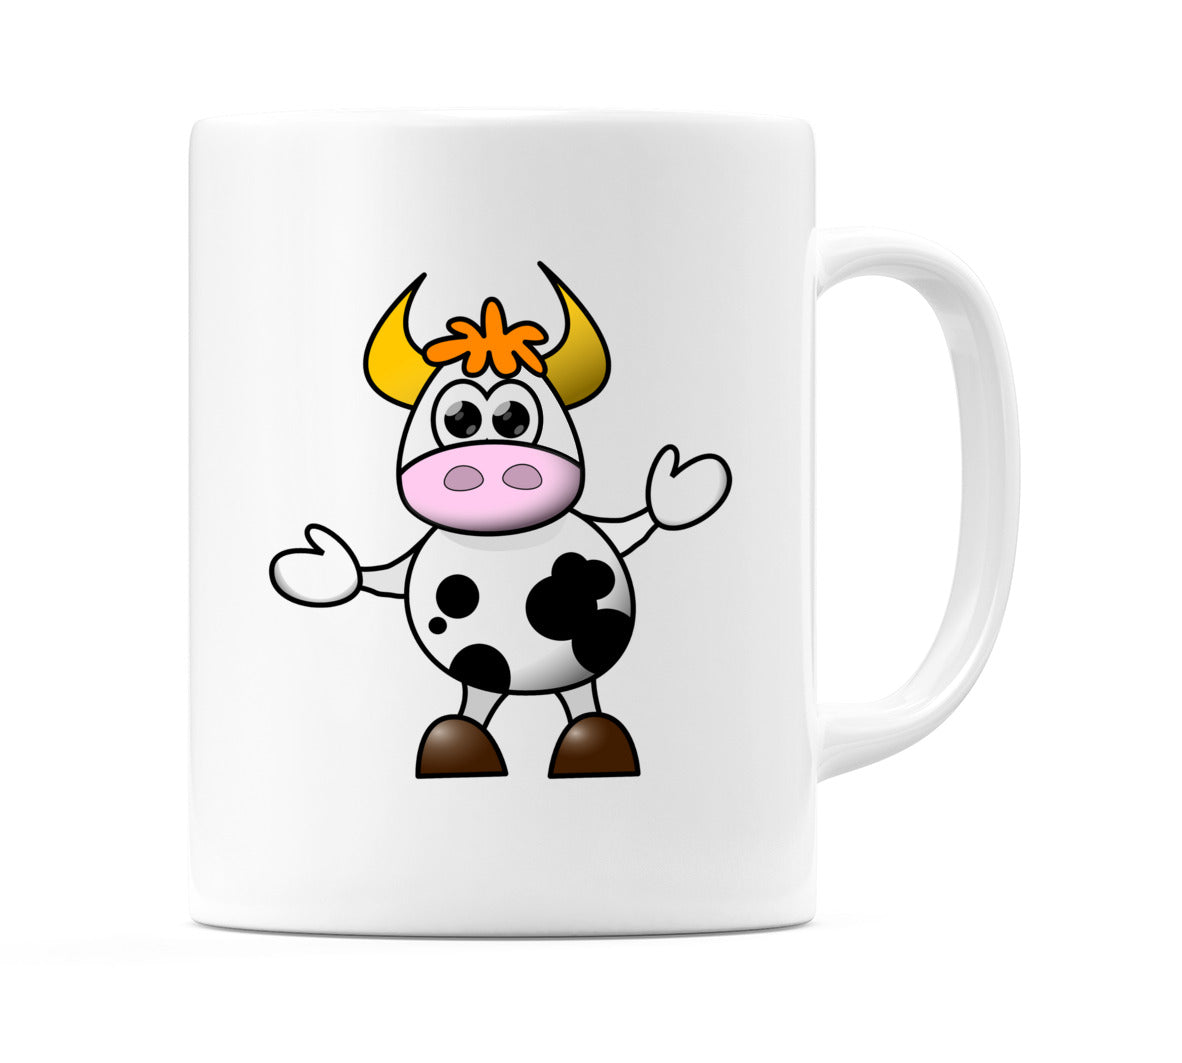 Cute Cow Mug